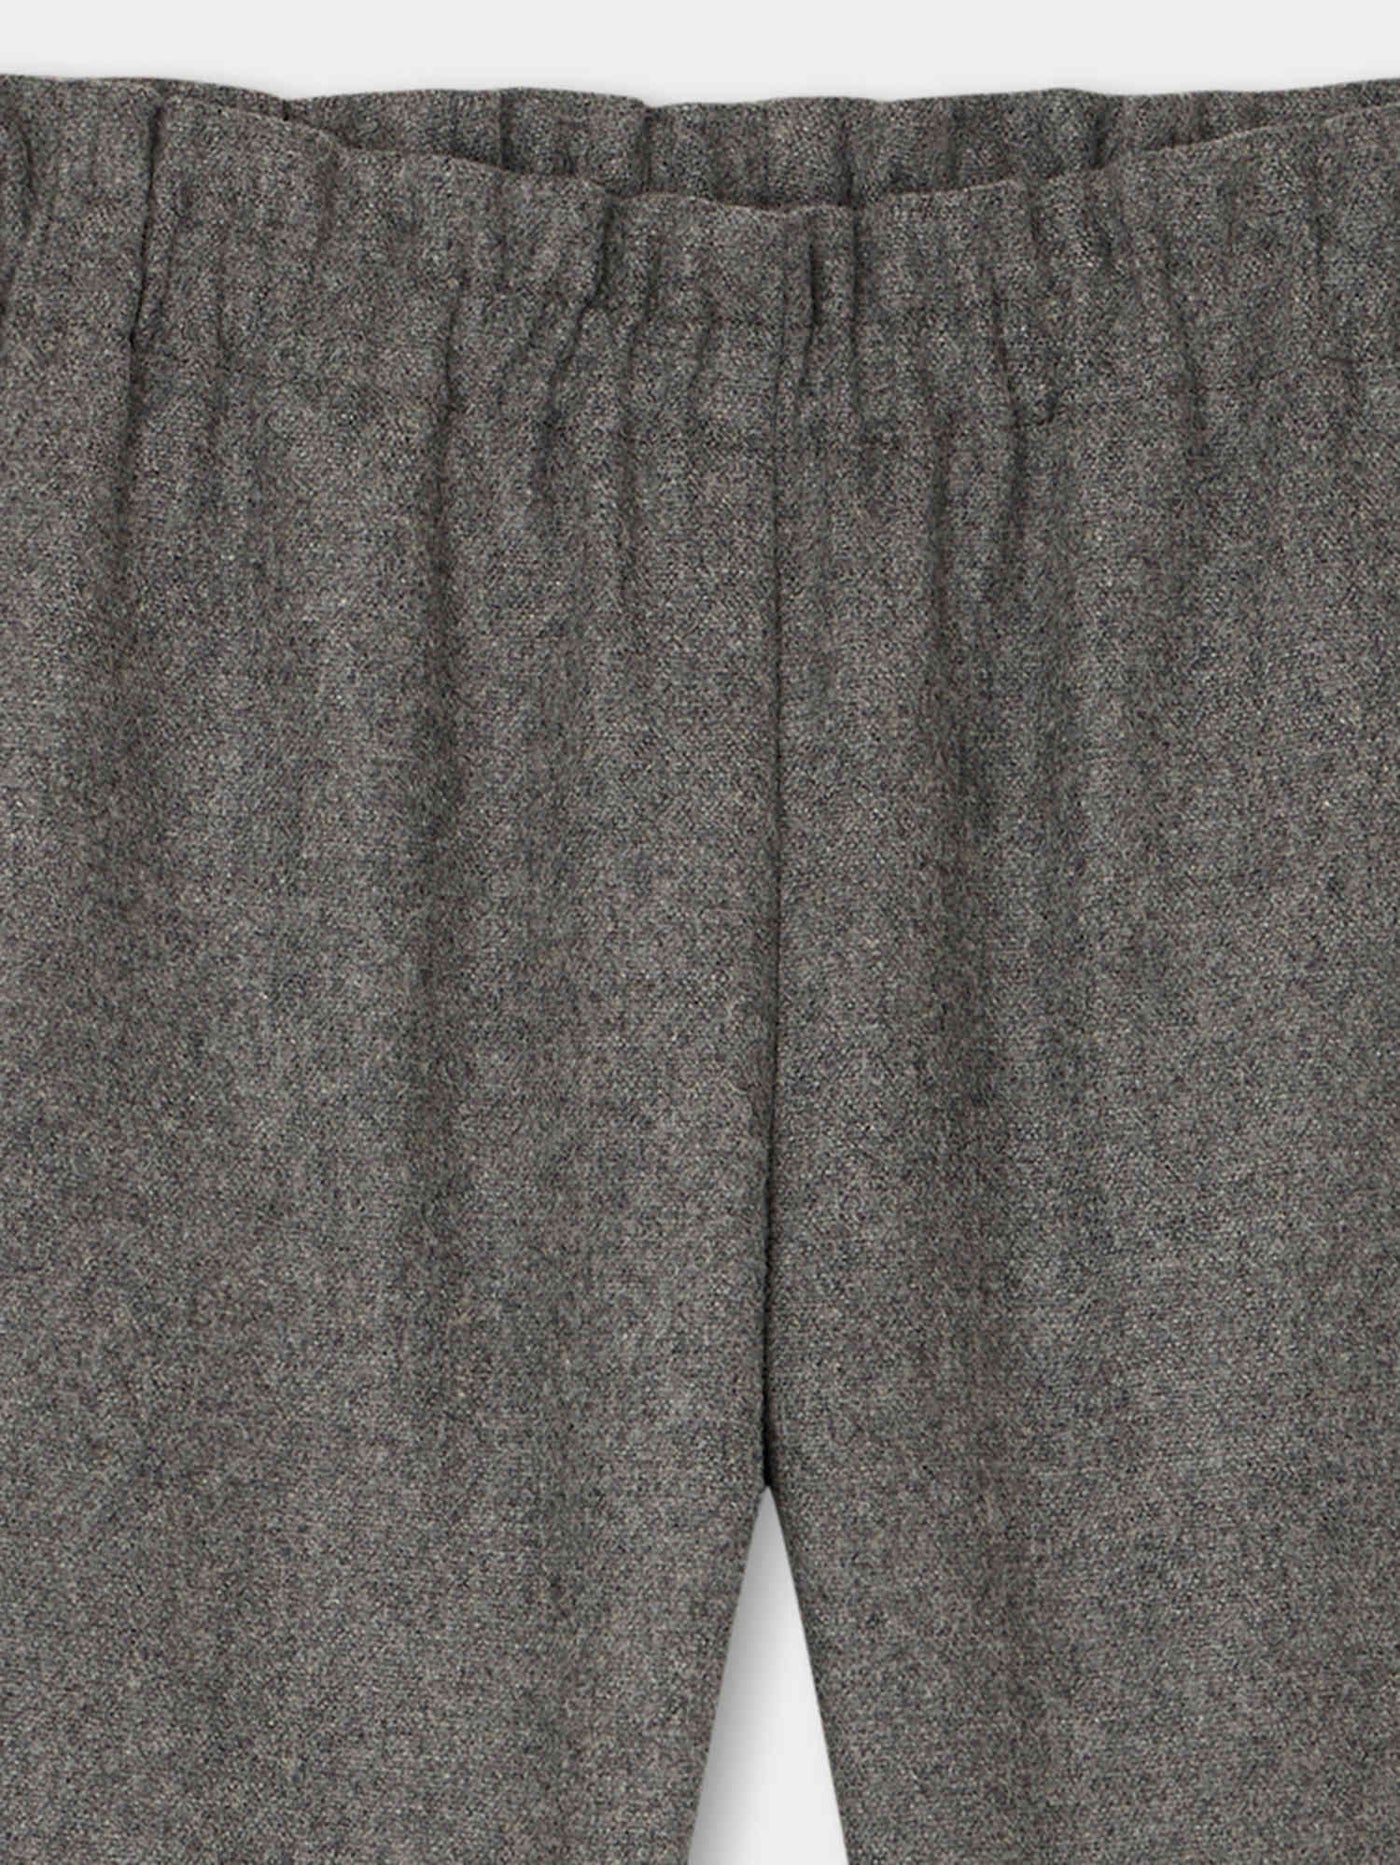 Fetiche Pants dark heathered gray